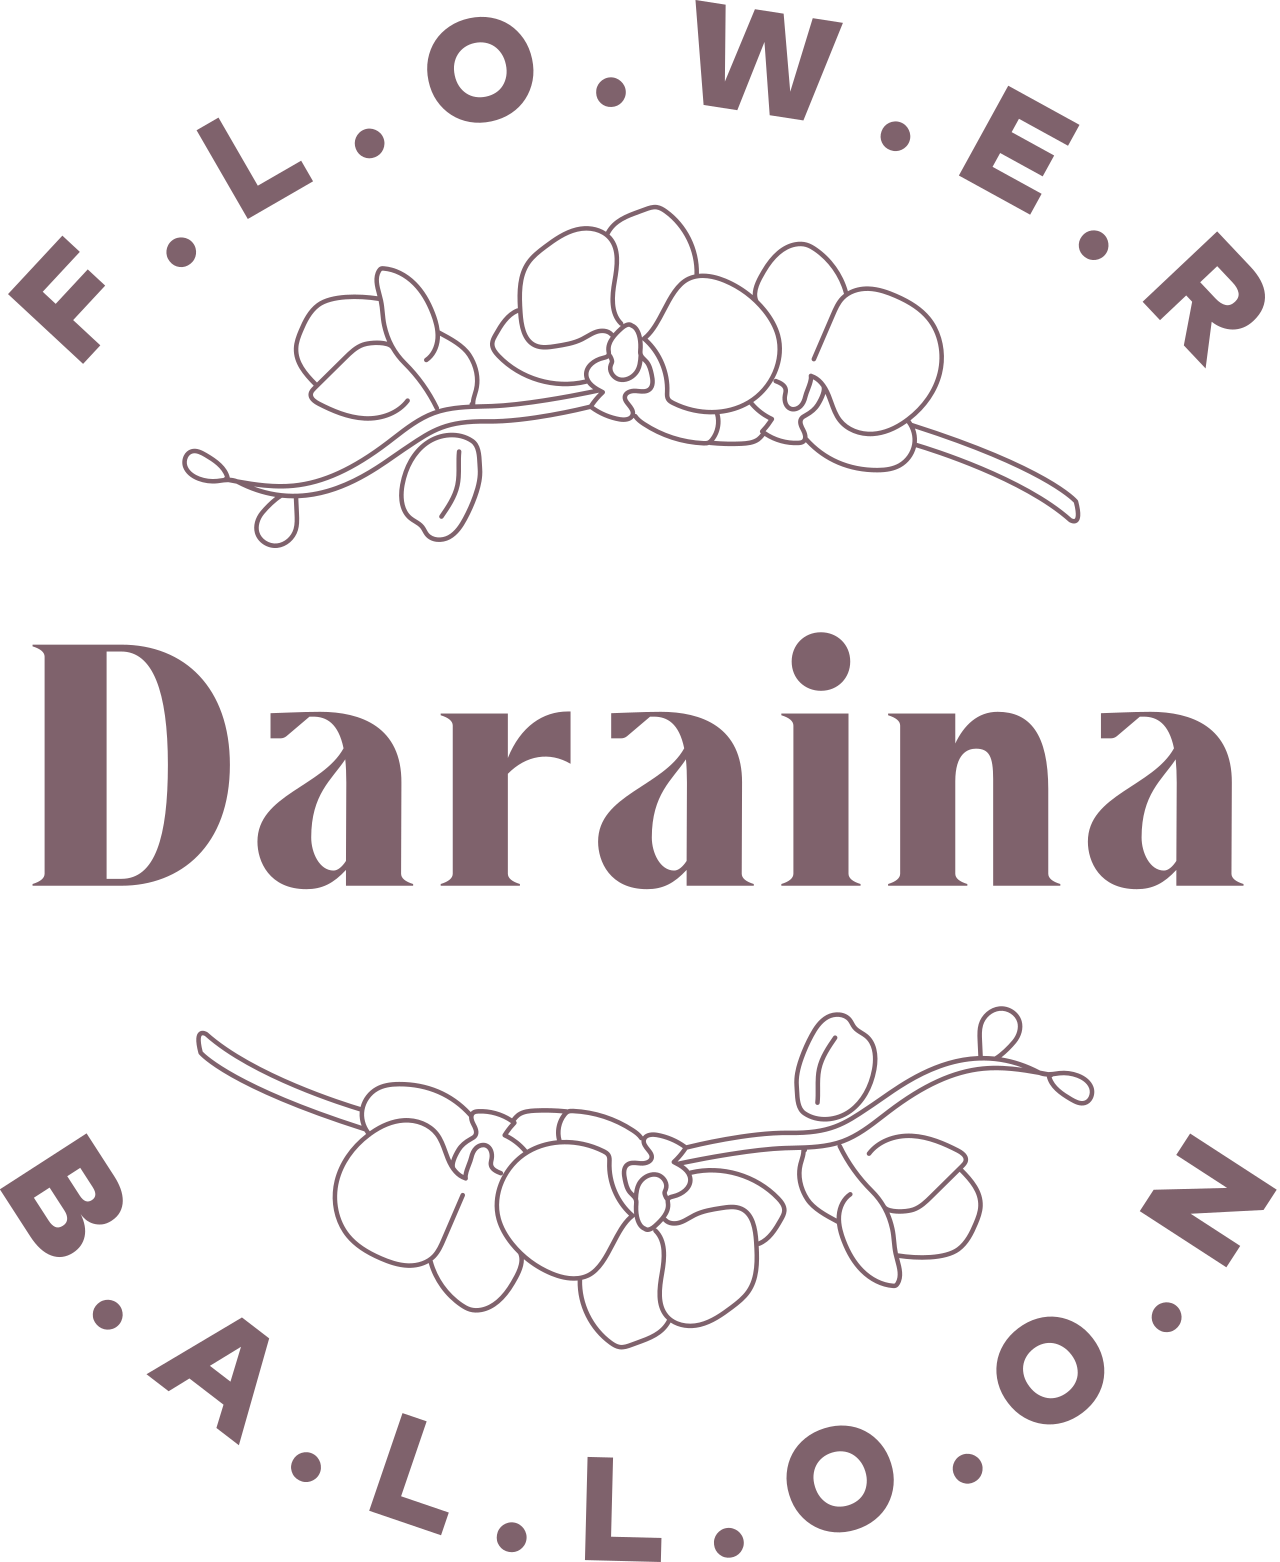 Daraina's web page